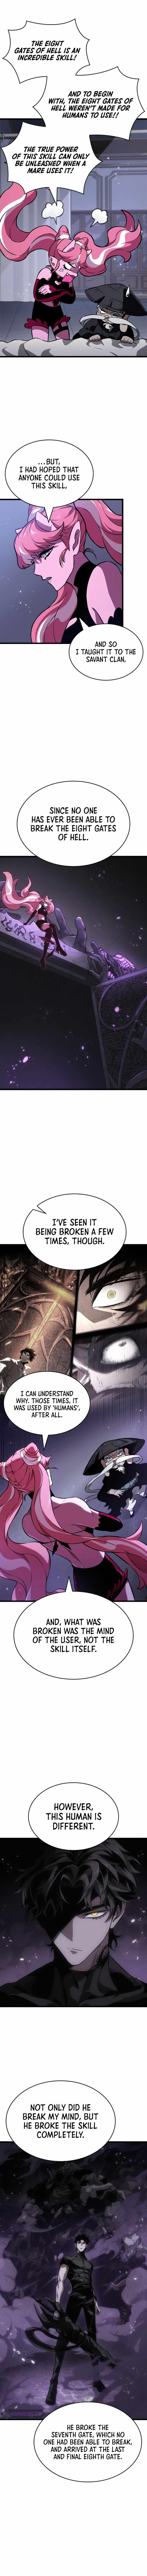 The World After The Fall Chapter 60 page 3 - Mangakakalot